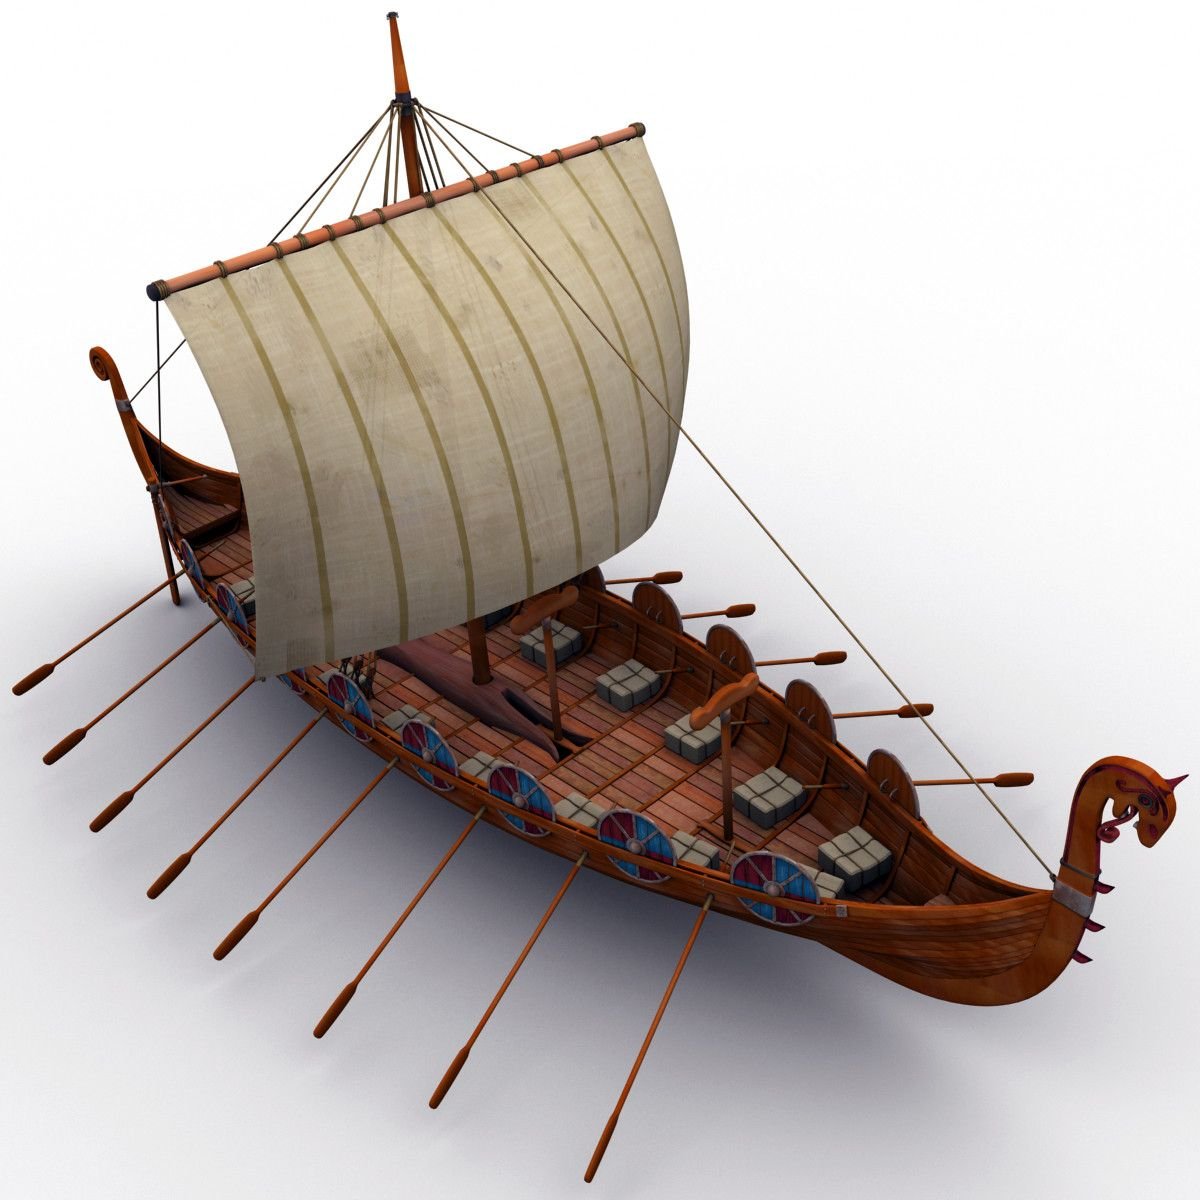 Описание ладьи. Модель корабля Viking ship (корабль викингов). Корабль викингов Драккара. Дракар викингов модель. Ладья Драккар викингов.